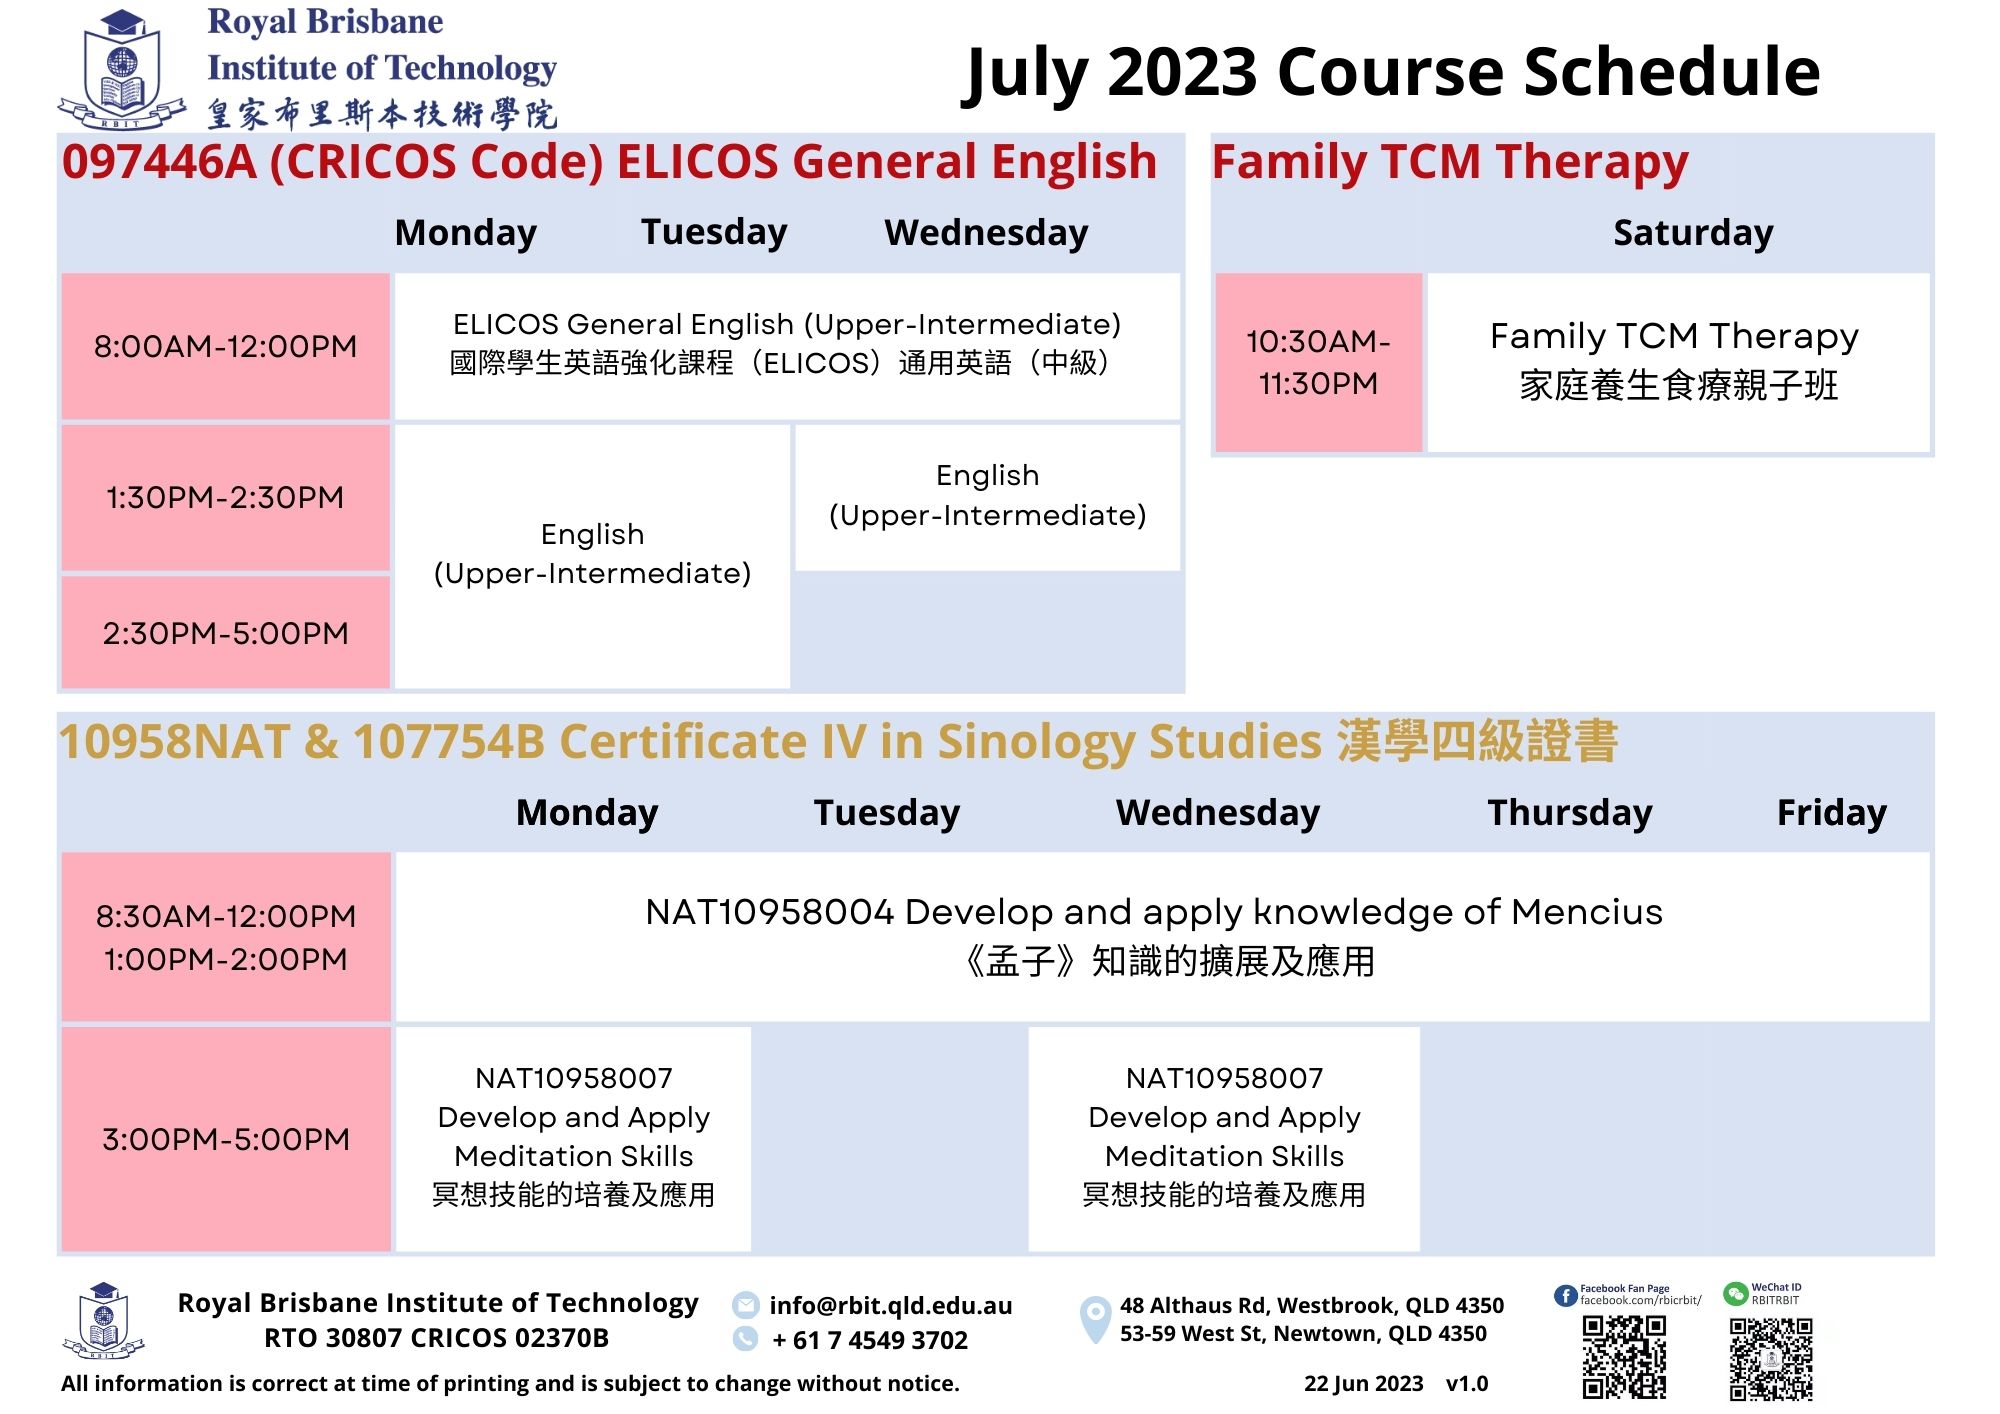 AL0_July 2023 Course Schedule_v1.0